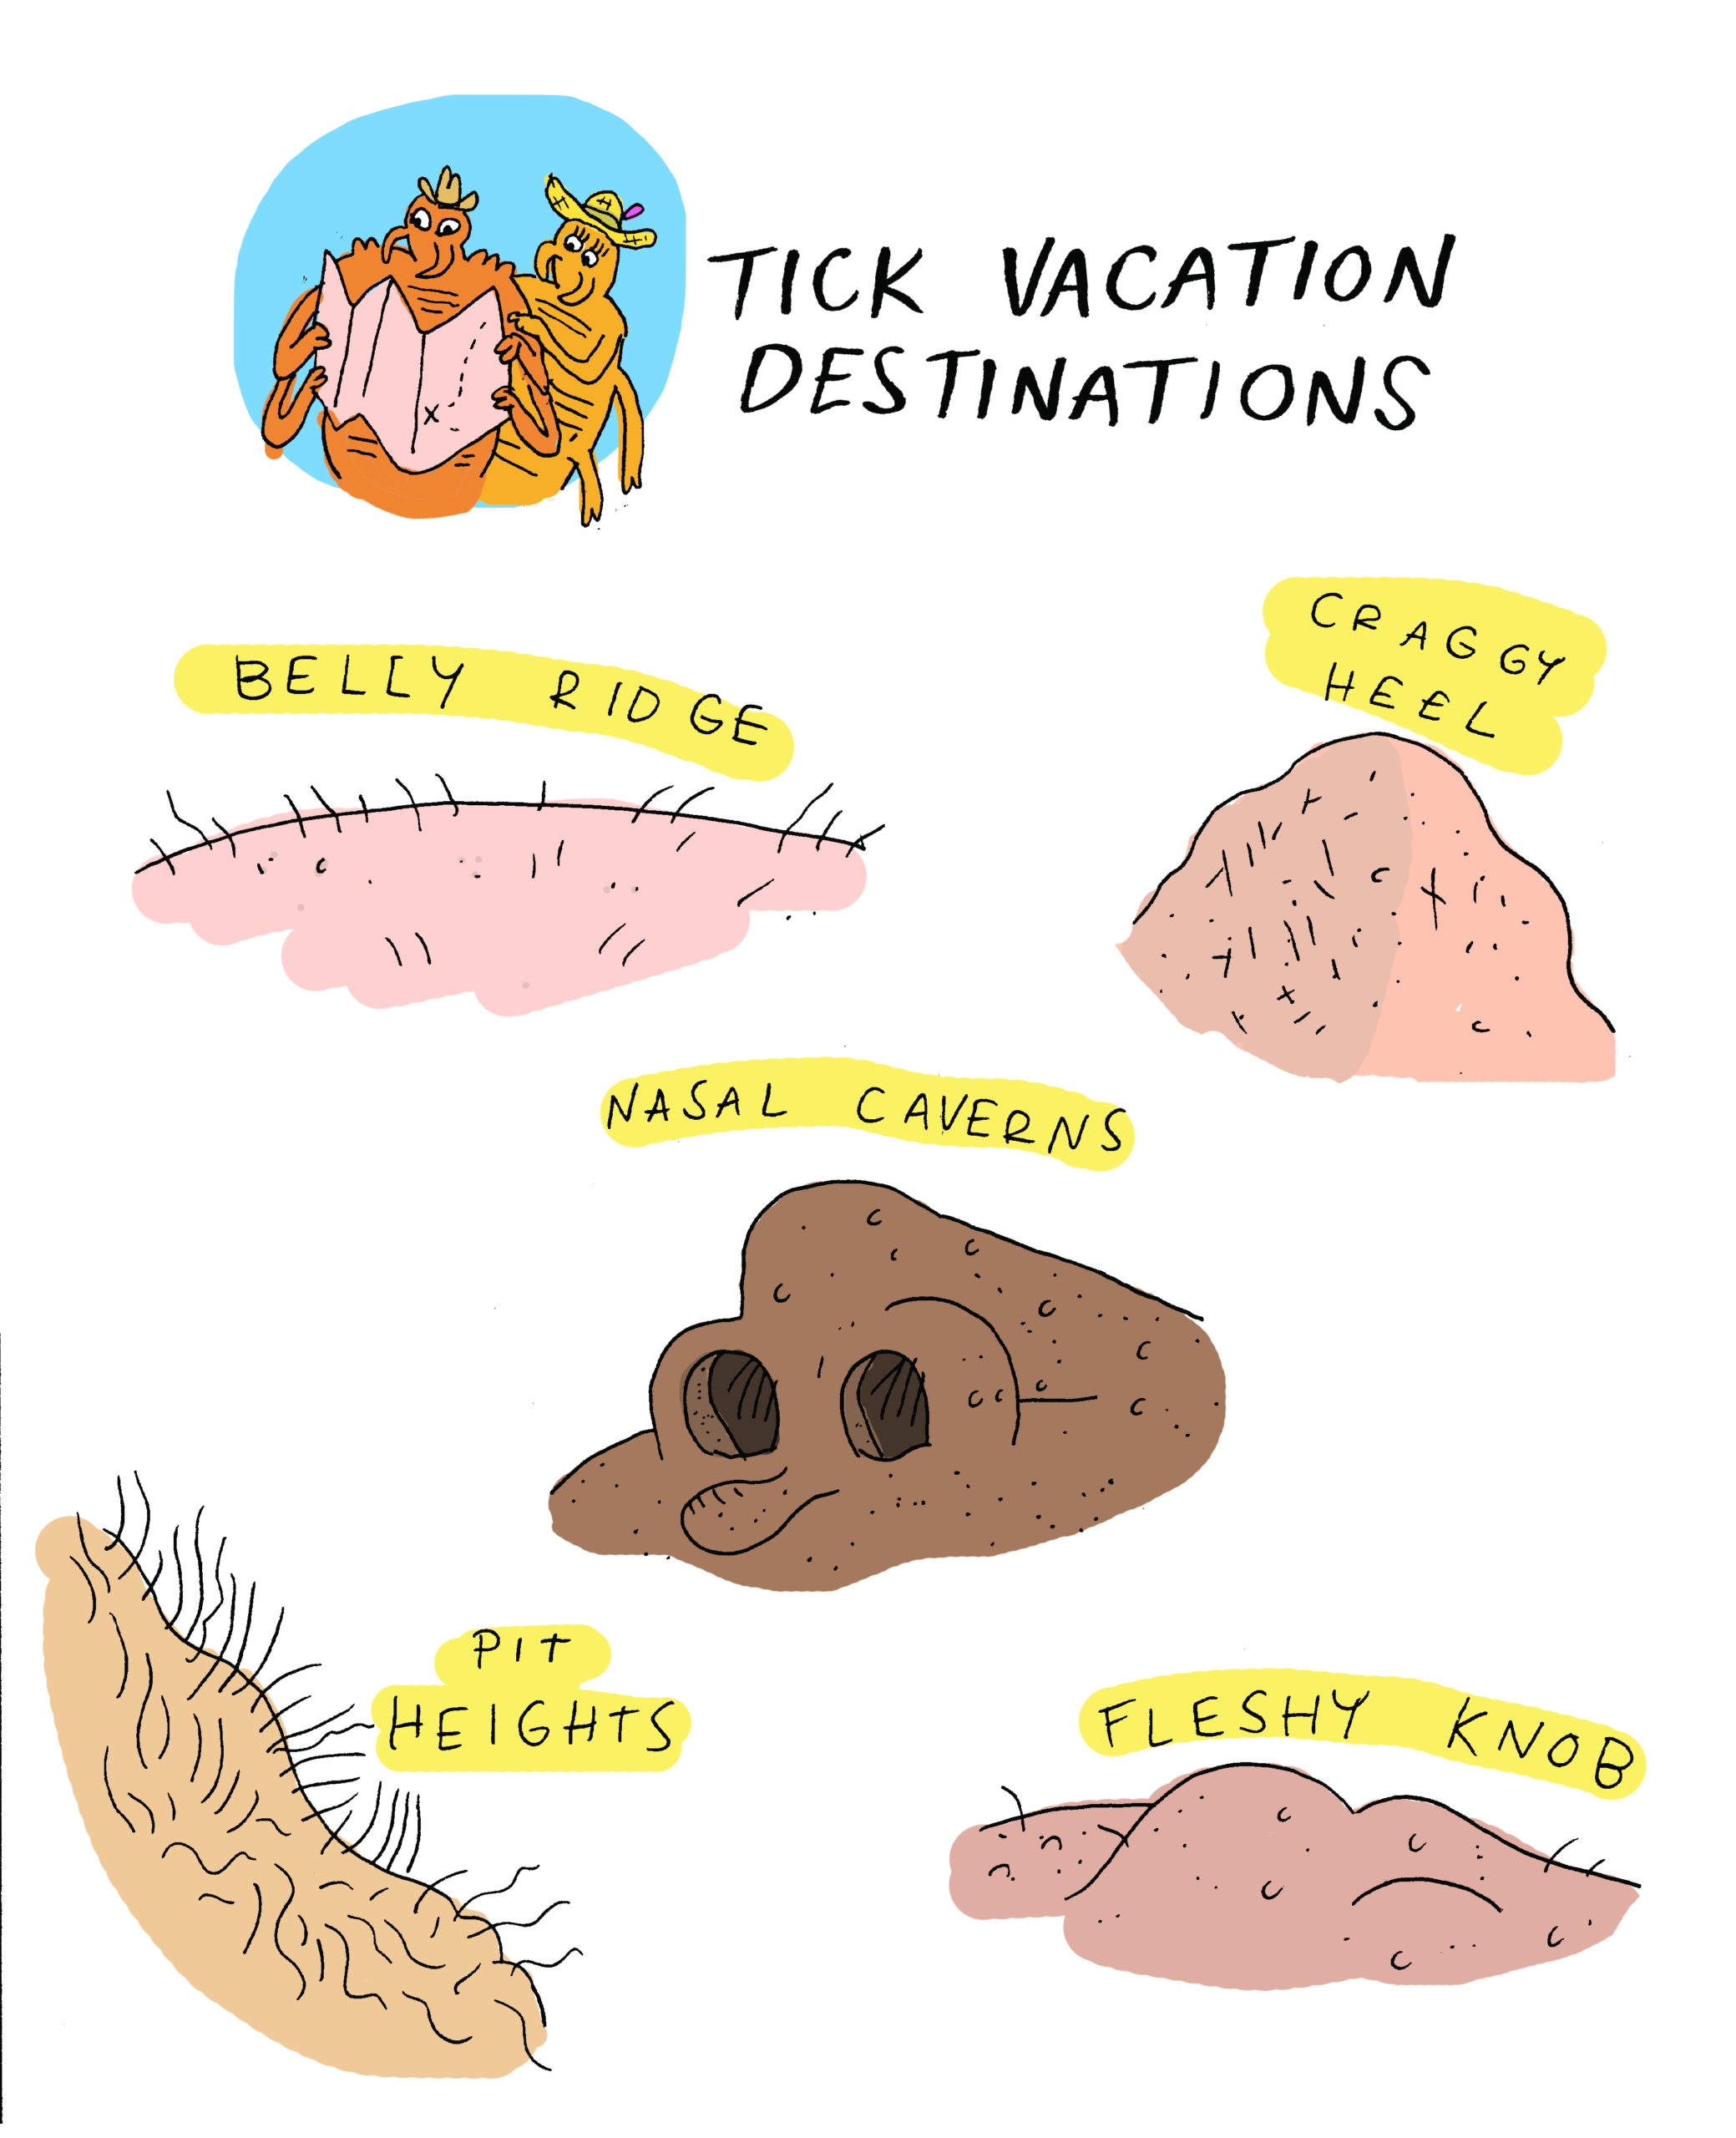 Tick Vacation